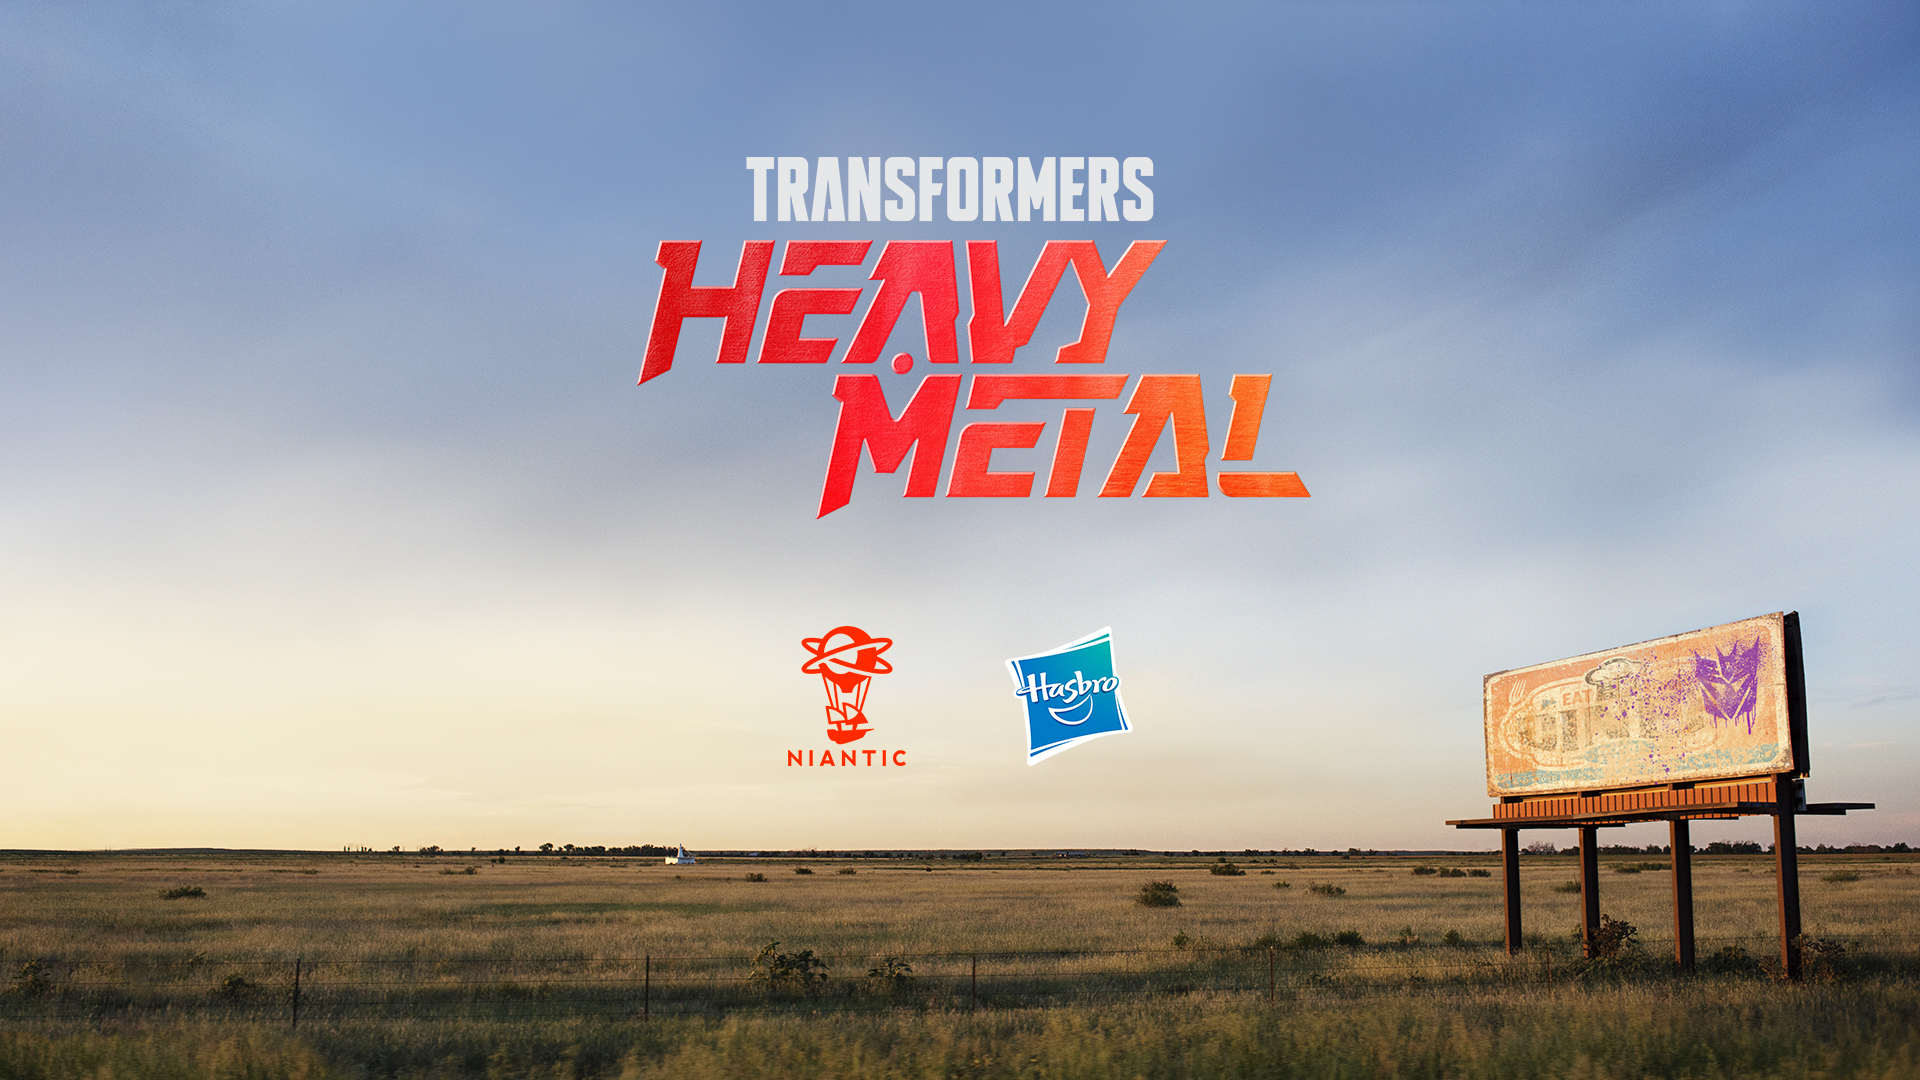 Imagen teaser publicada anteriormente para Transformers: Heavy Metal